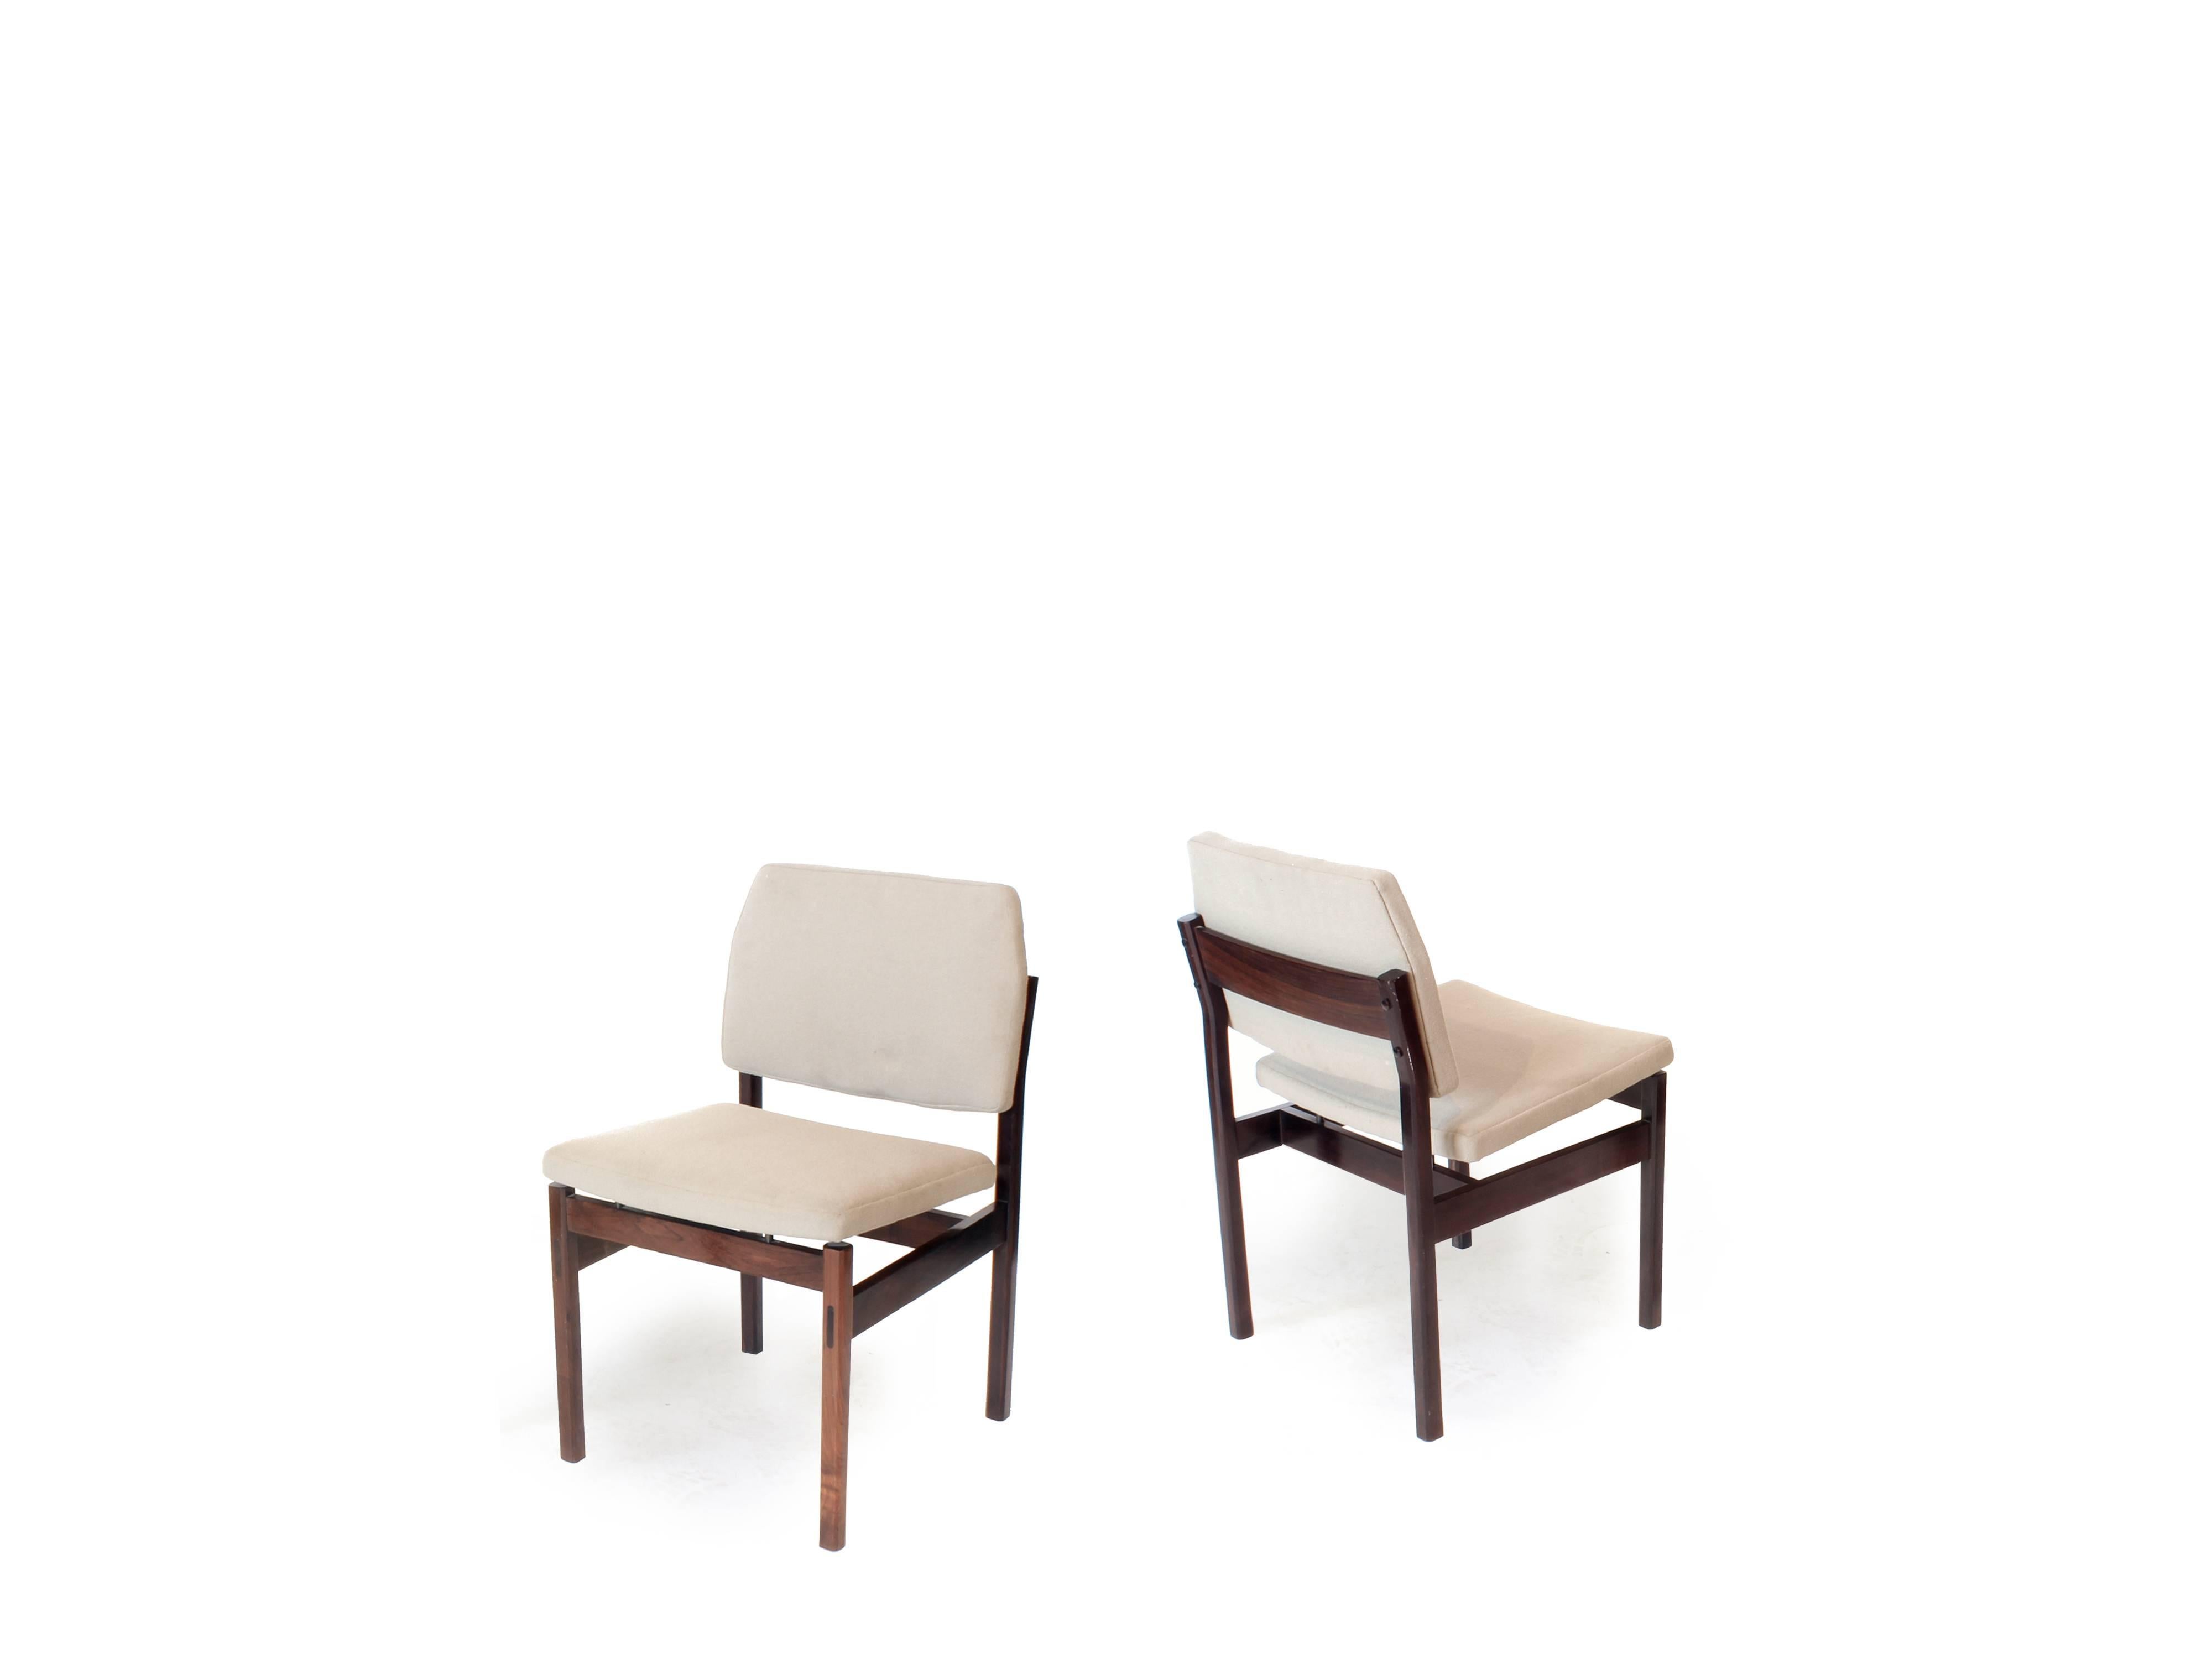 Brazilian Arredamento Midcentury brazilian Chair in Rosewood with Linen Upholstery, 60s